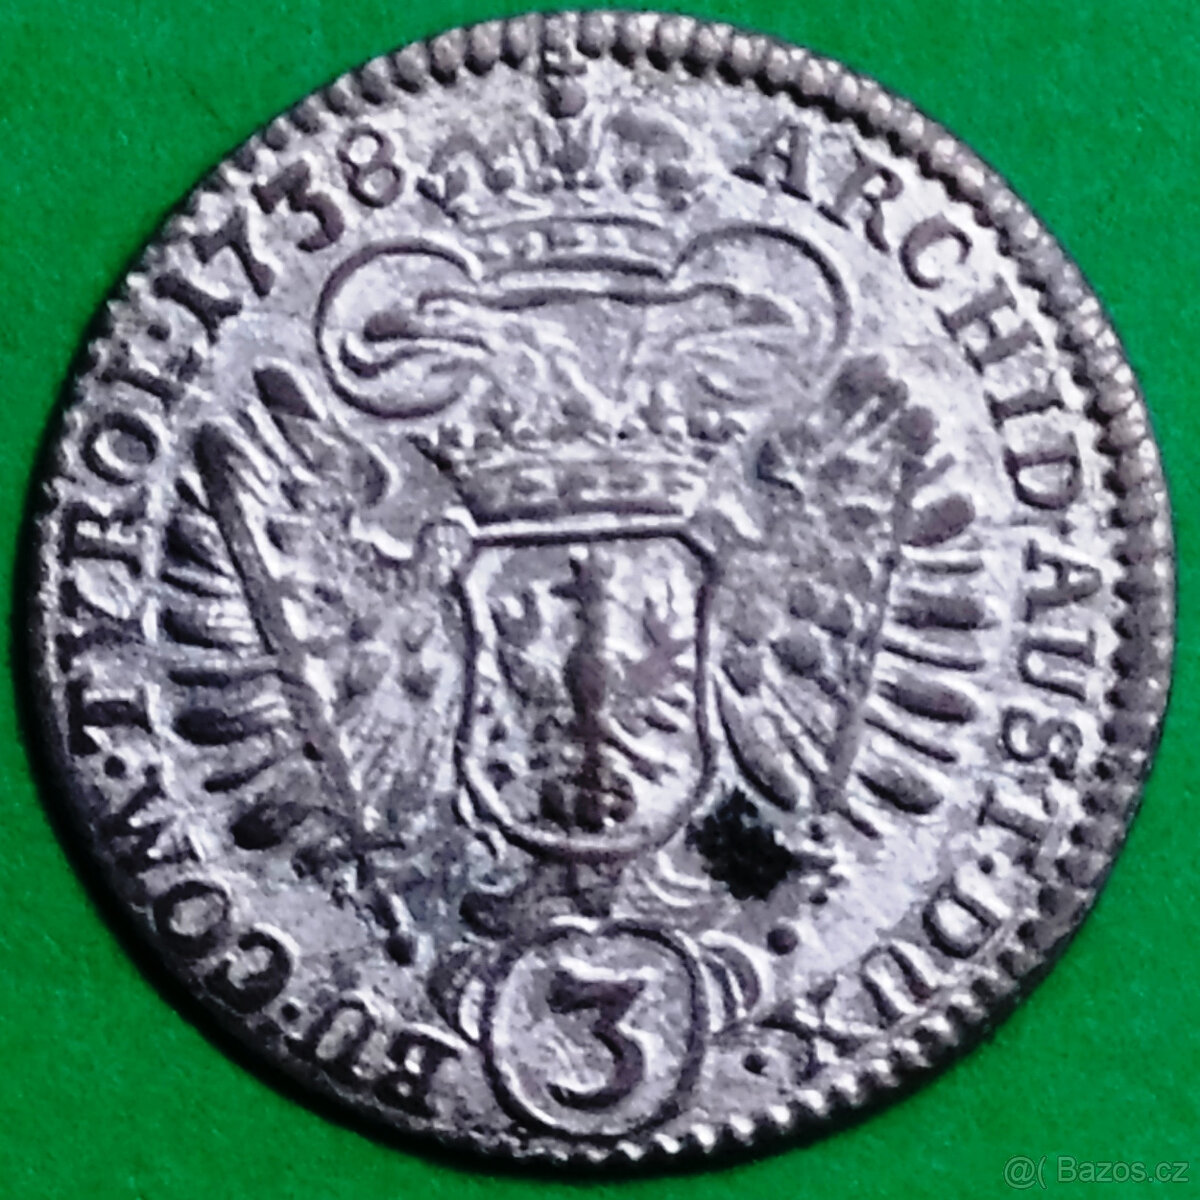 3. Krejcar 1738 HALL KAREL VI. hledaná mince